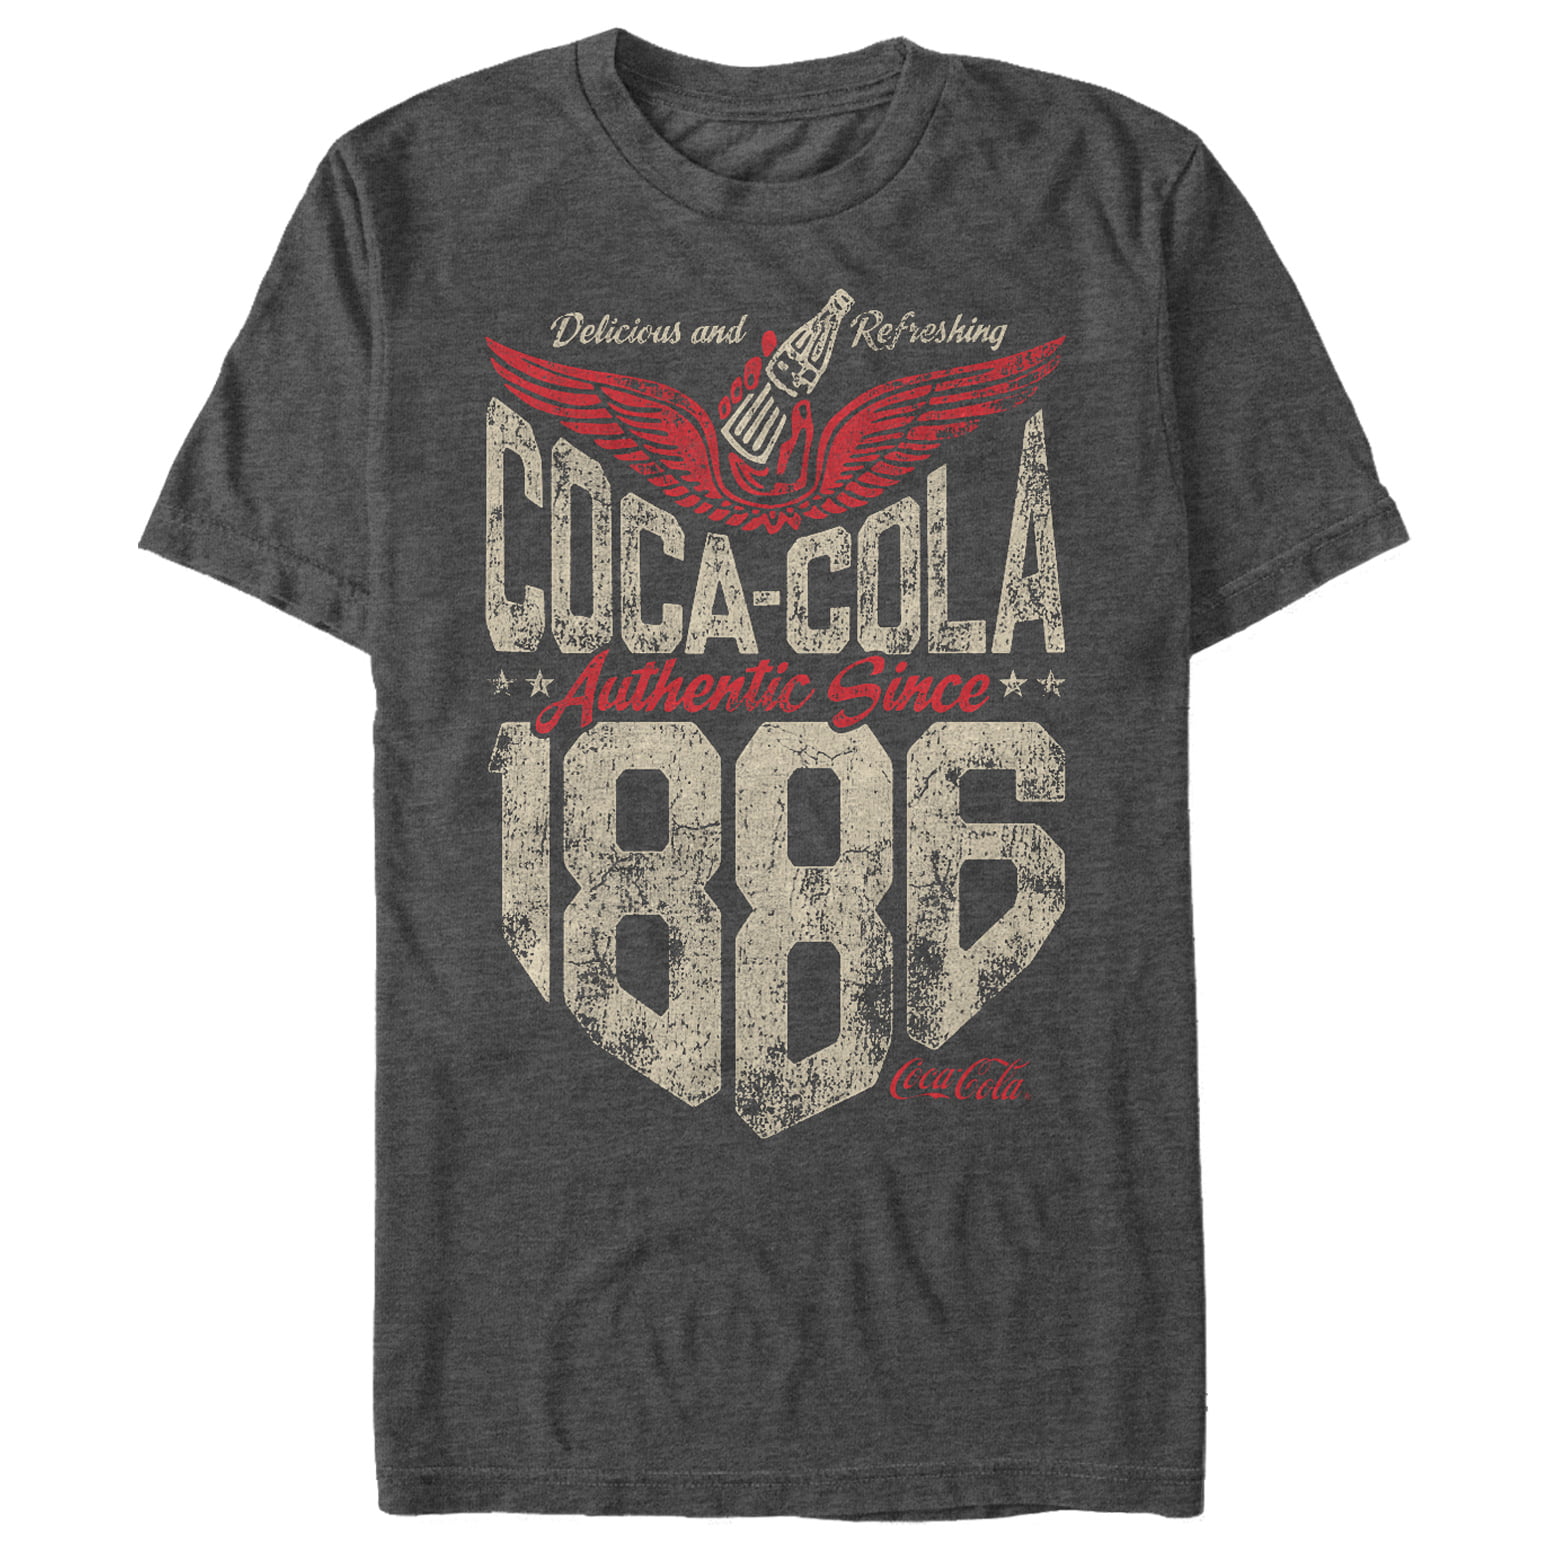 Since 1998. Cocaroach футболка. Musinians since 1998.